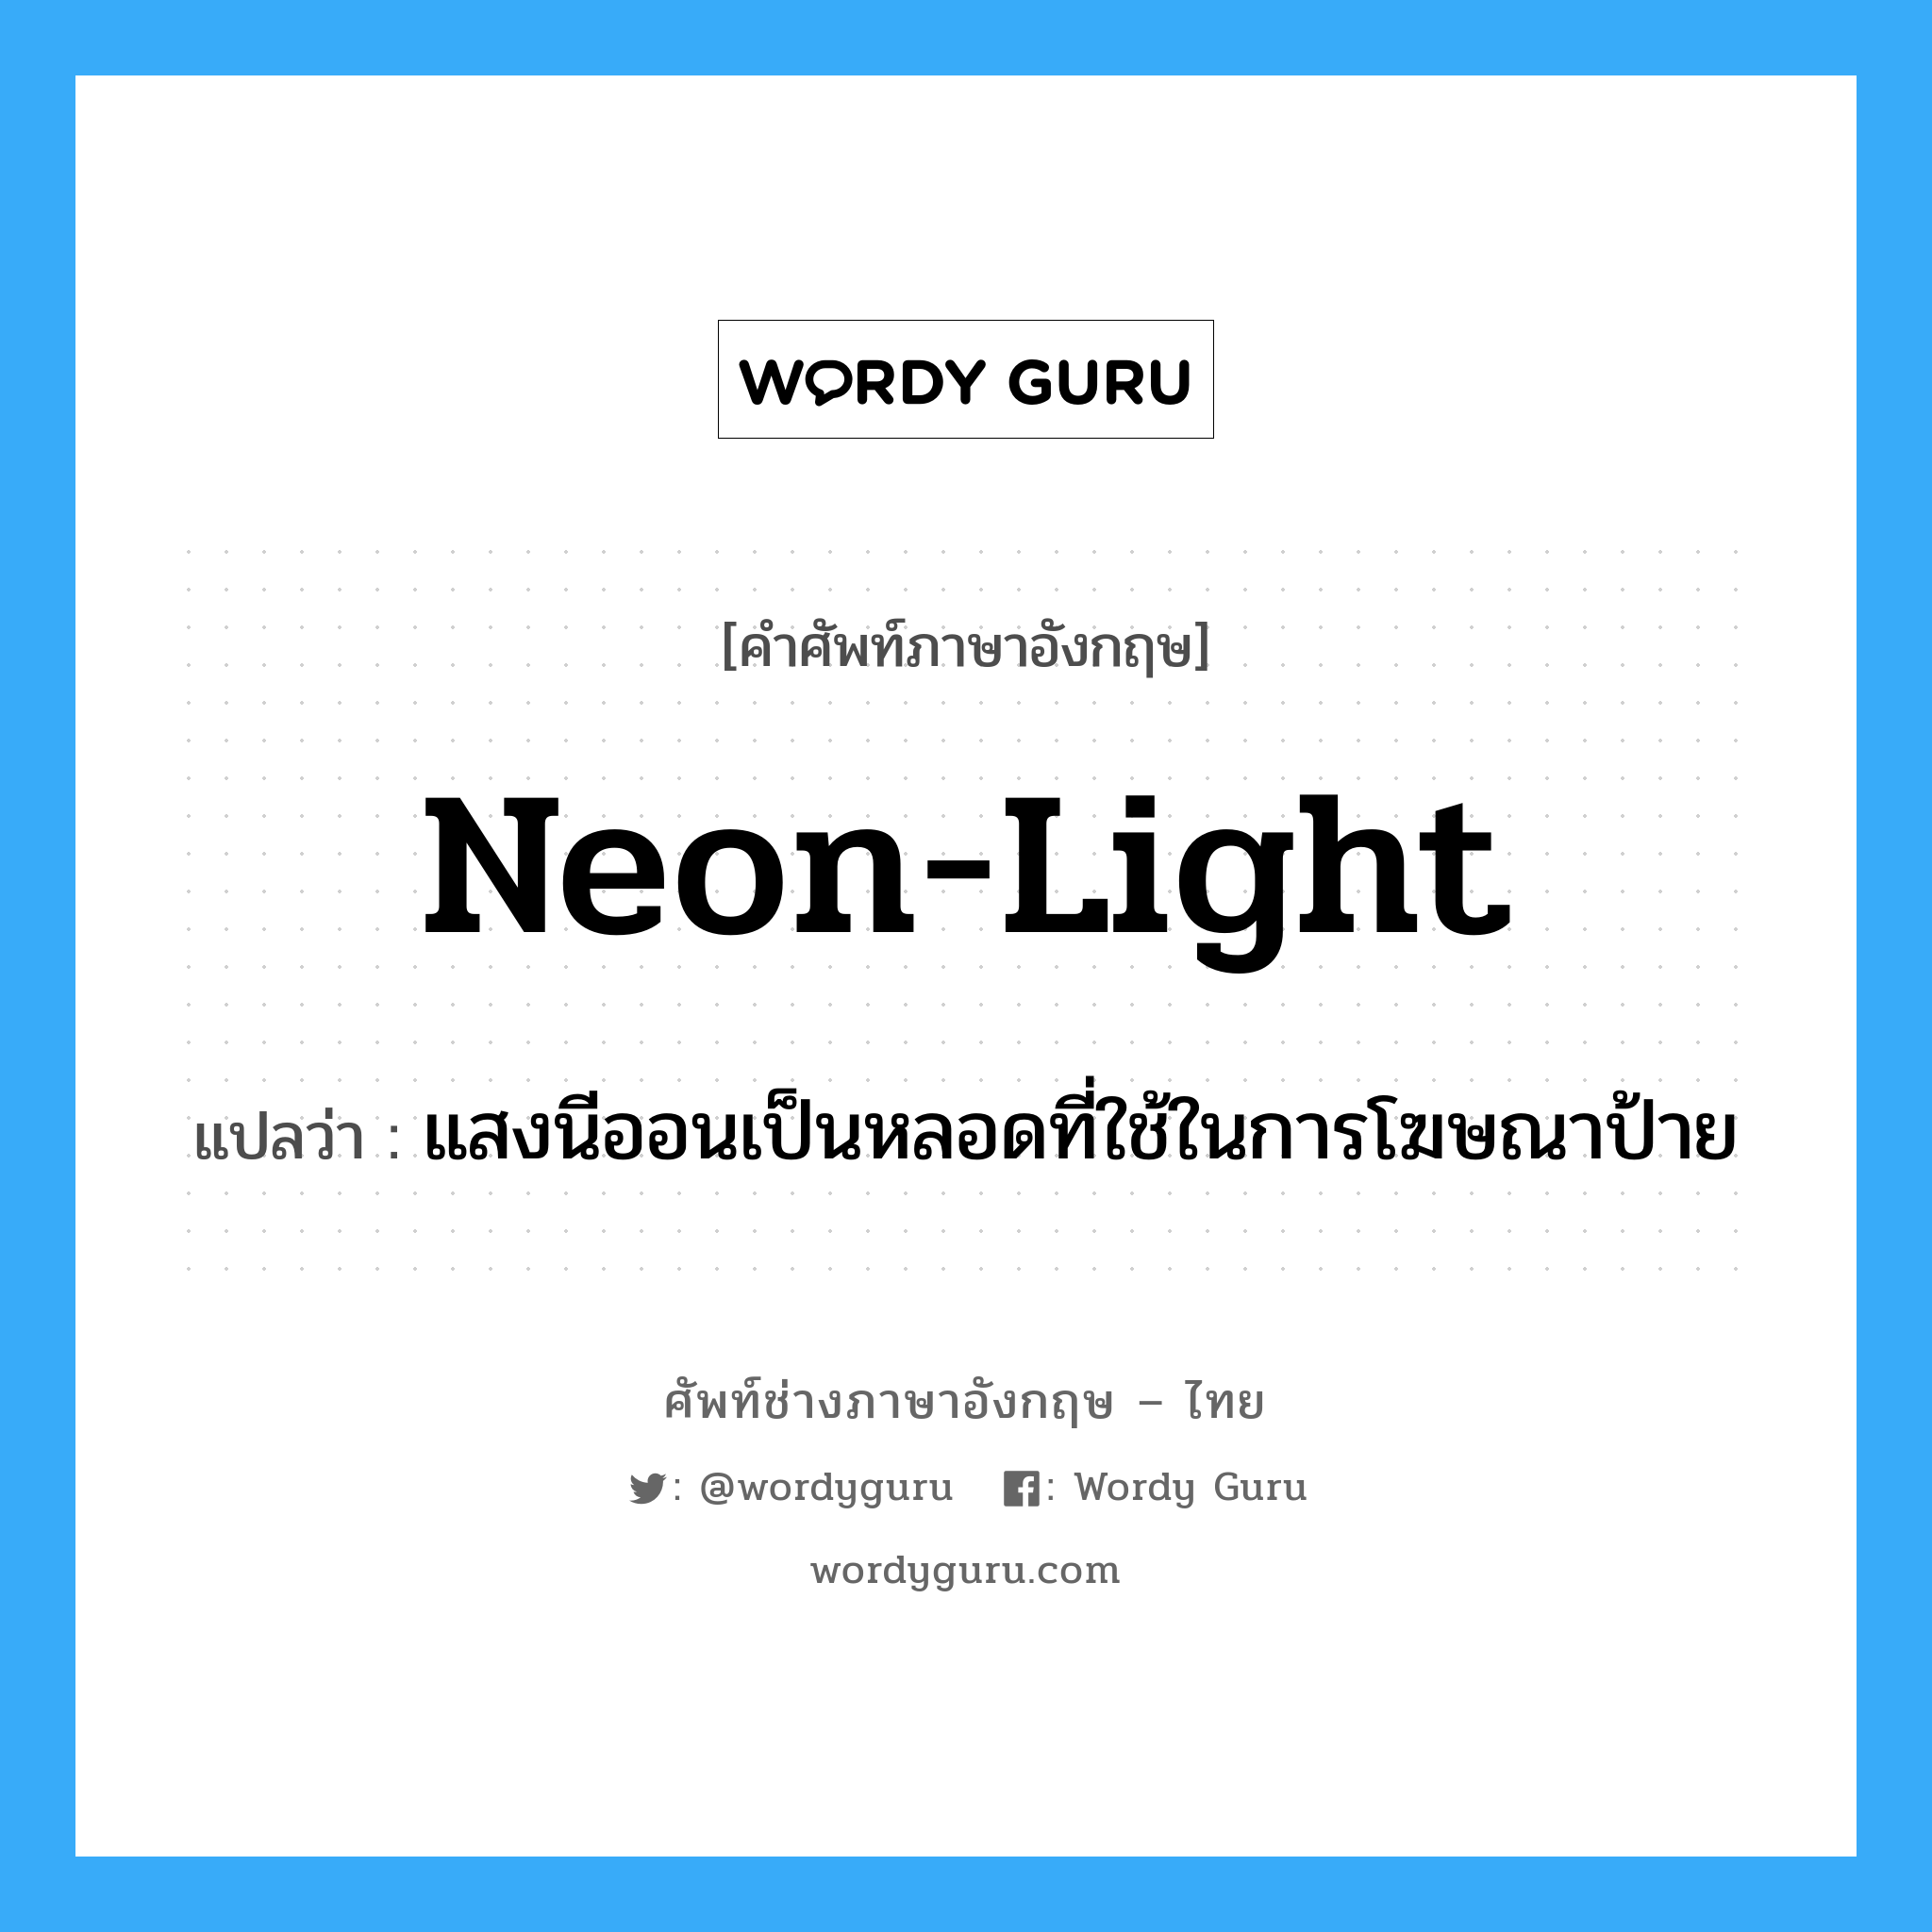 neon light แปลว่า?, คำศัพท์ช่างภาษาอังกฤษ - ไทย neon-light คำศัพท์ภาษาอังกฤษ neon-light แปลว่า แสงนีออนเป็นหลอดที่ใช้ในการโฆษณาป้าย